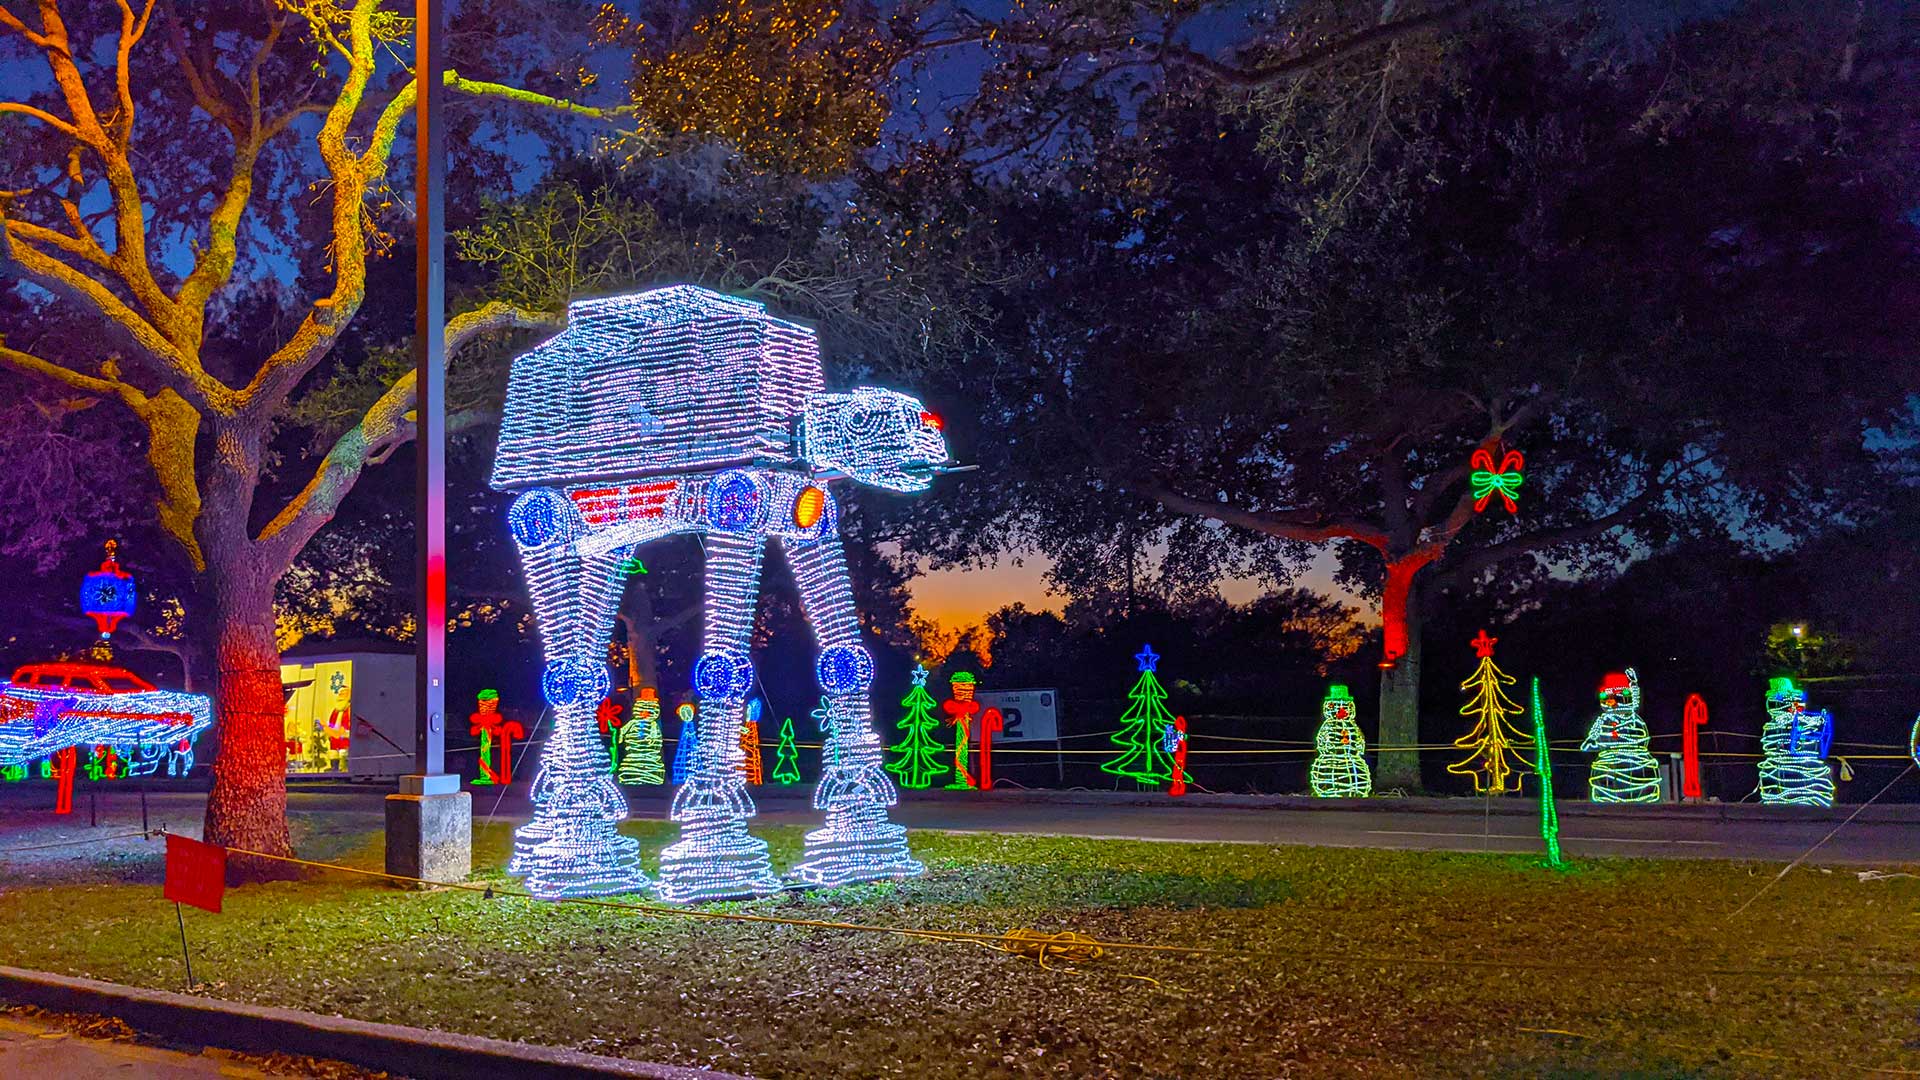 Christmas Lights Star Wars Walker reduced